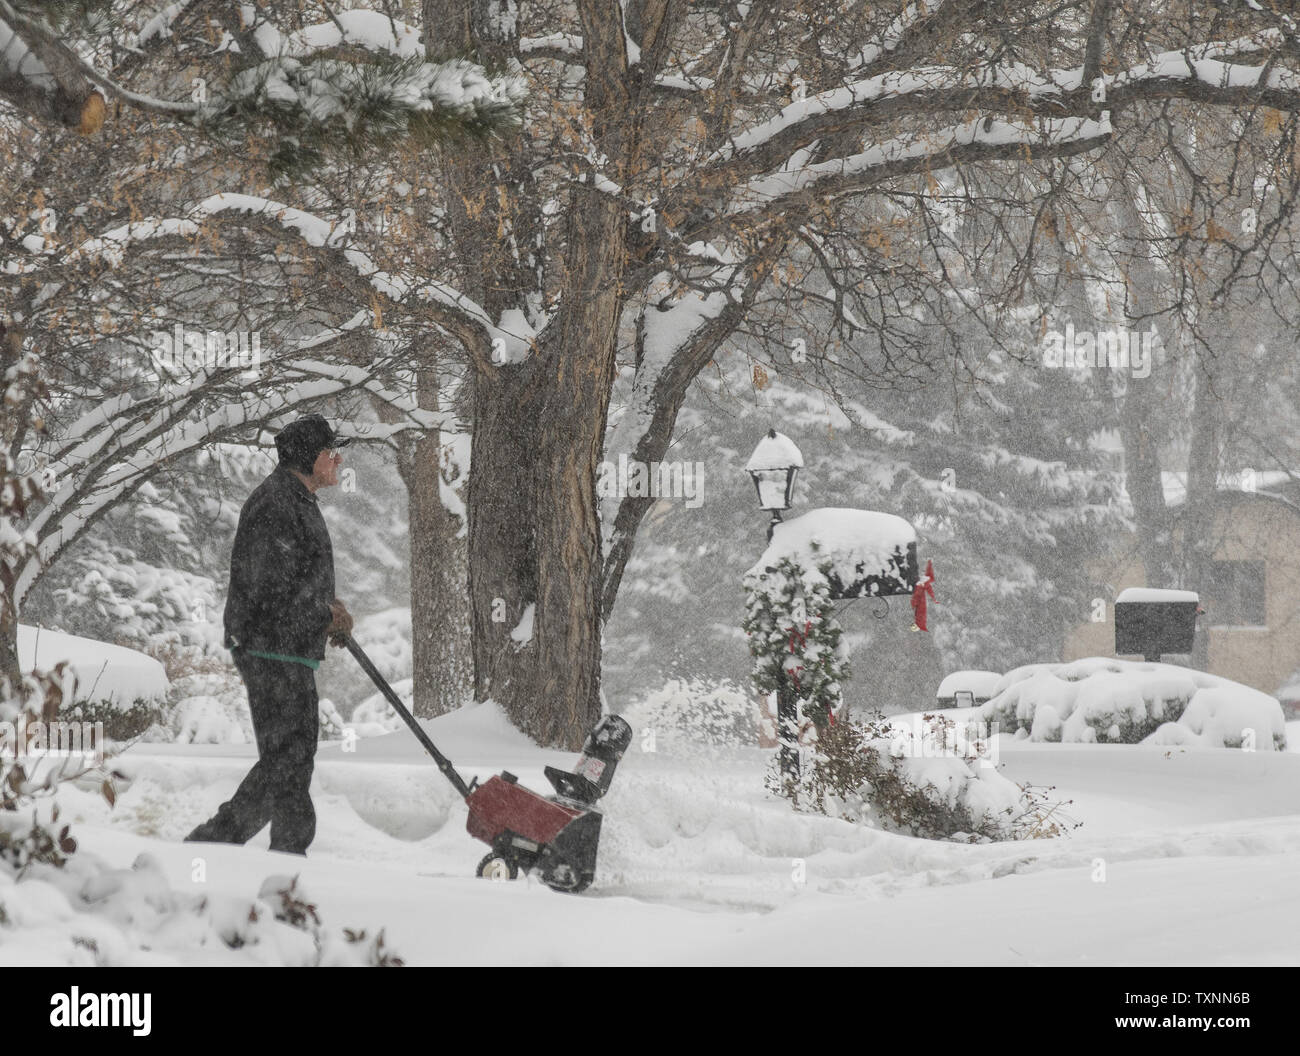 https://c8.alamy.com/comp/TXNN6B/an-elderly-man-using-a-small-snow-blower-enjoys-the-beauty-as-snow-covers-his-neighborhood-during-a-winter-storm-in-denver-on-december-15-2015-the-snowfall-has-reached-ten-inches-in-parts-of-metro-denver-photo-by-gary-c-caskeyupi-TXNN6B.jpg